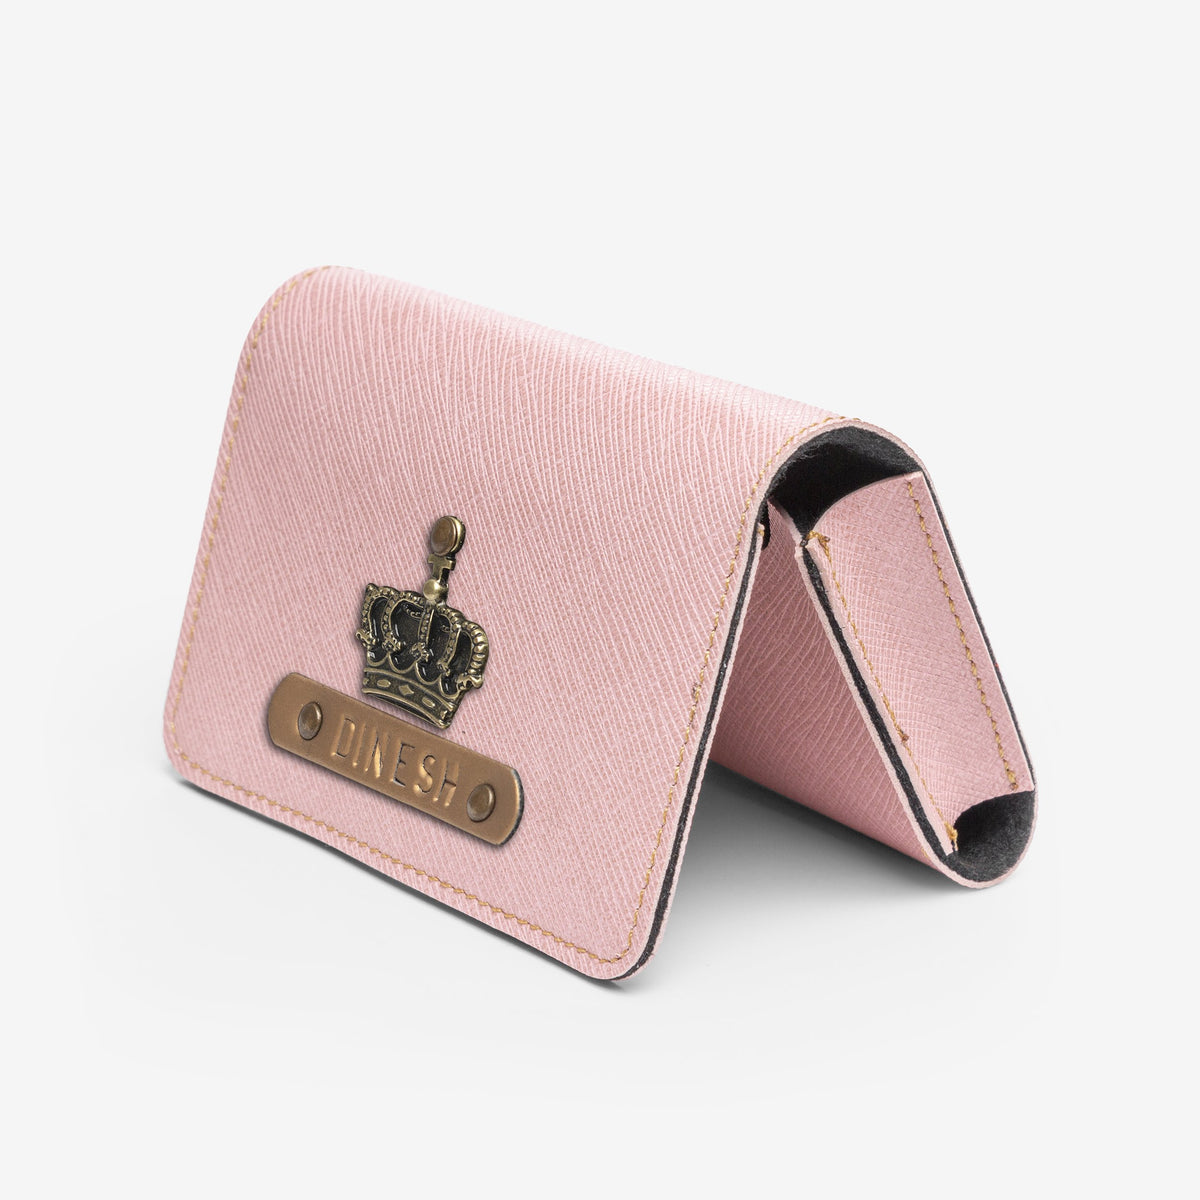 The Messy Corner Card Holder Business Card Holder/Wallet - Salmon Pink